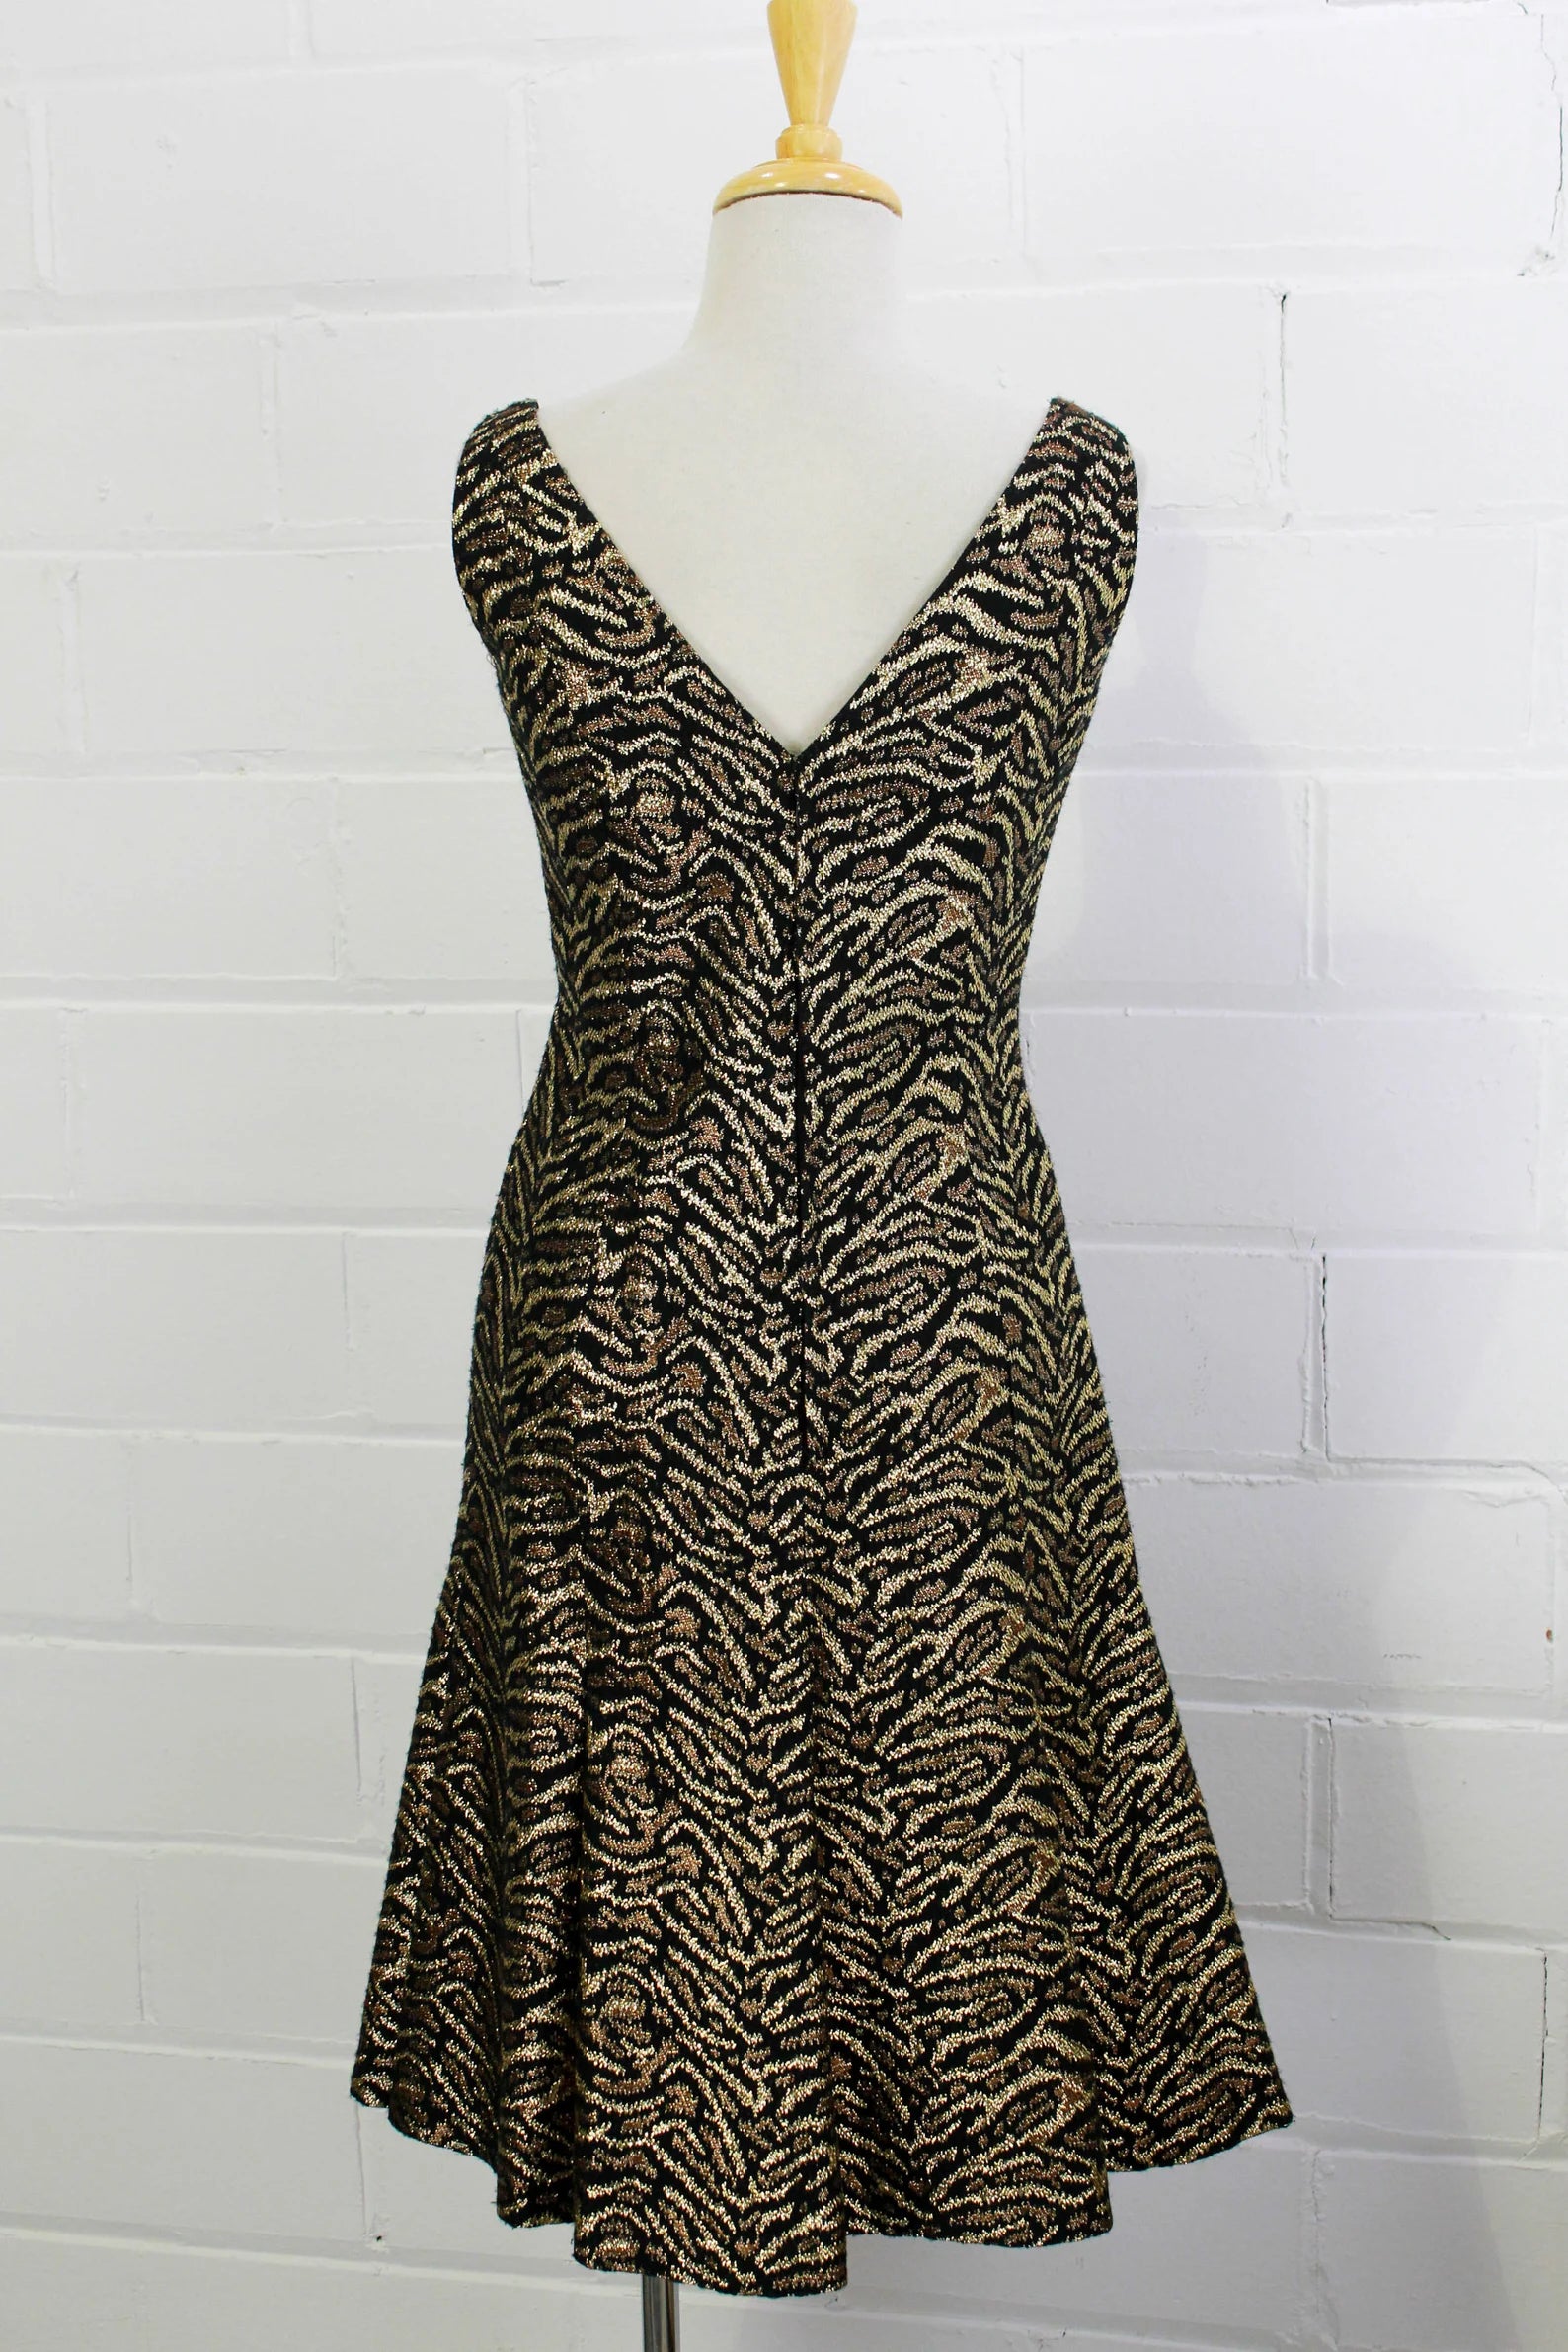 Vintage 60s Mollie Parnis Animal Print Metallic Dress, Womens Sleeveless Gold Lurex Tiger Print Cocktail Dress, B34, W28, Evening Dress